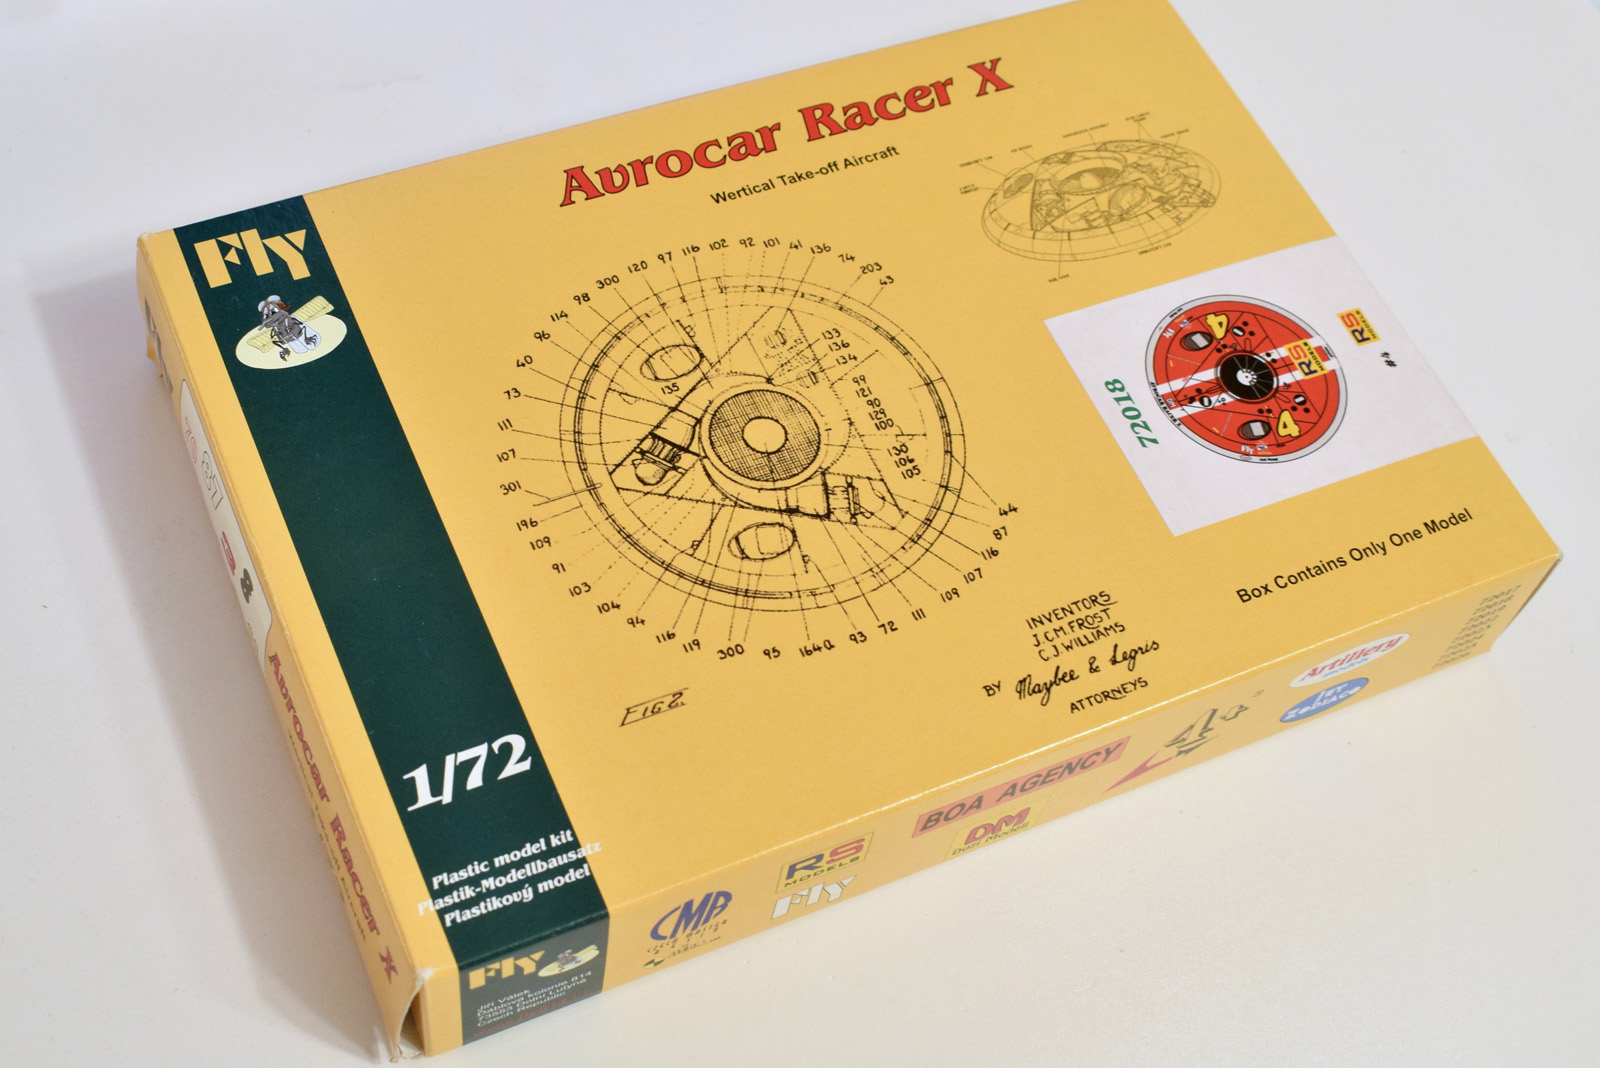 Avrocar Racer X / 1:72 / Fly